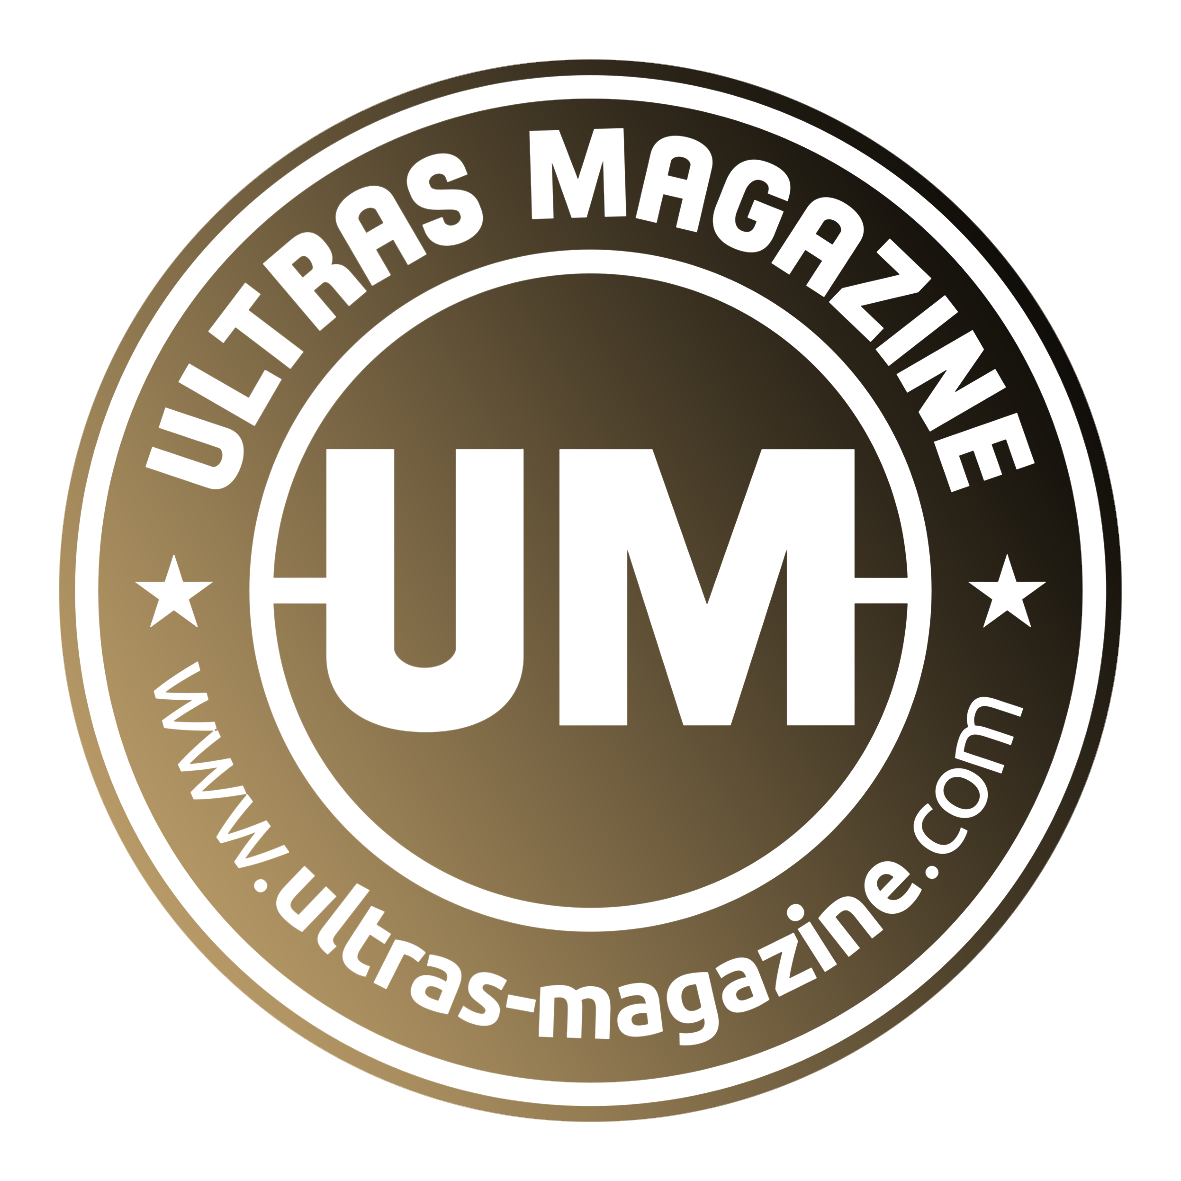 Ultras Magazine